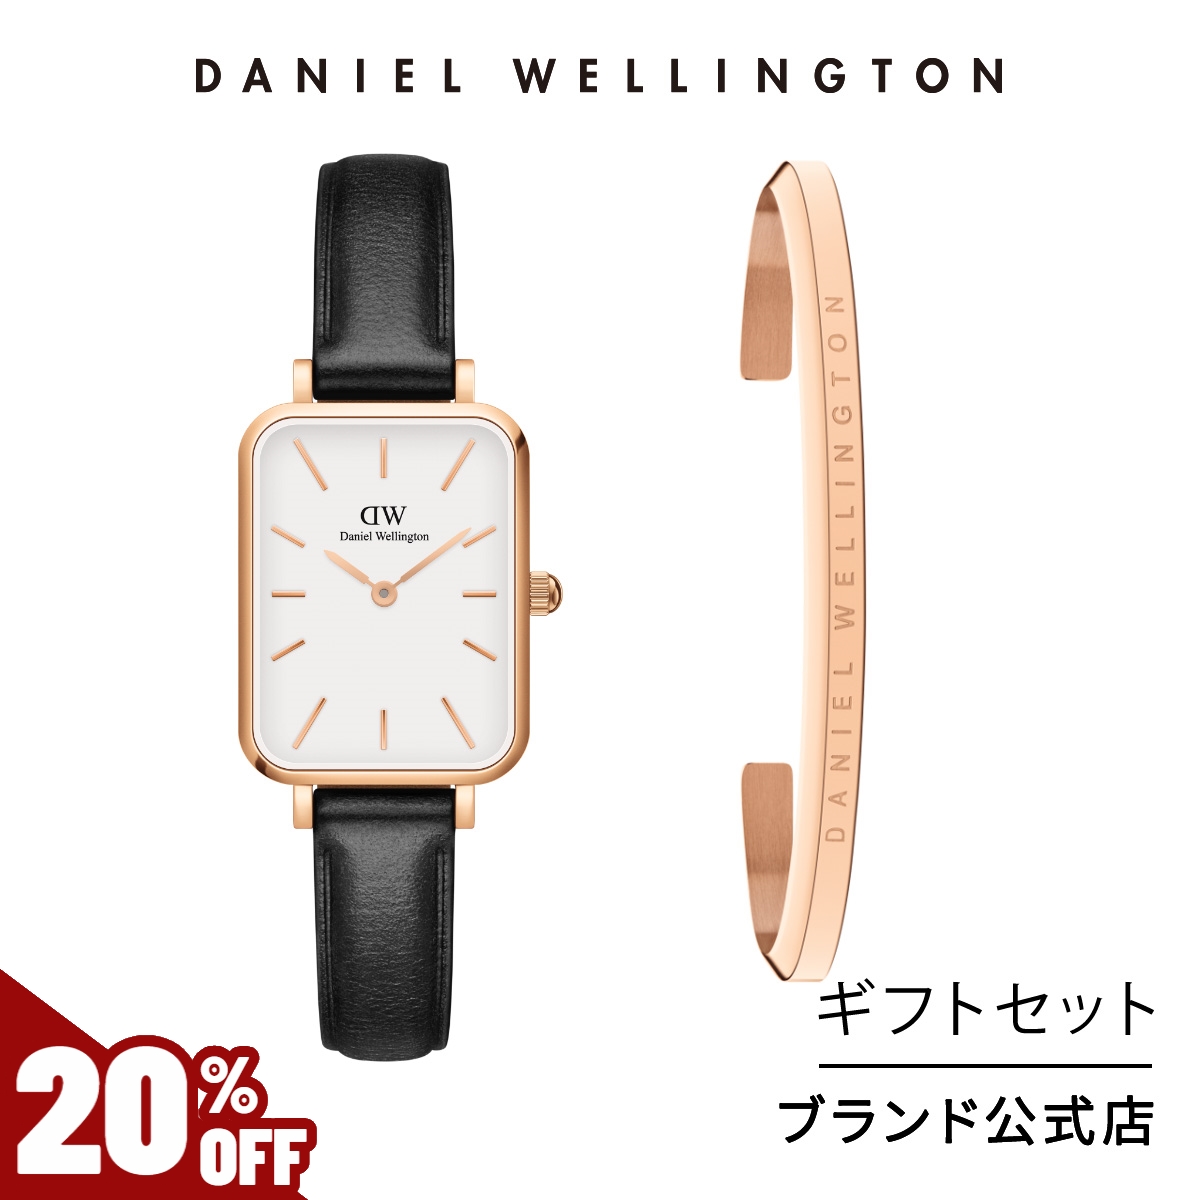 ＼20%OFF／ ギフトセット 腕時計 ブレスレット ダニエルウェリントン DW ブランド レディース  20代 30代 40代 プレゼント ギフト